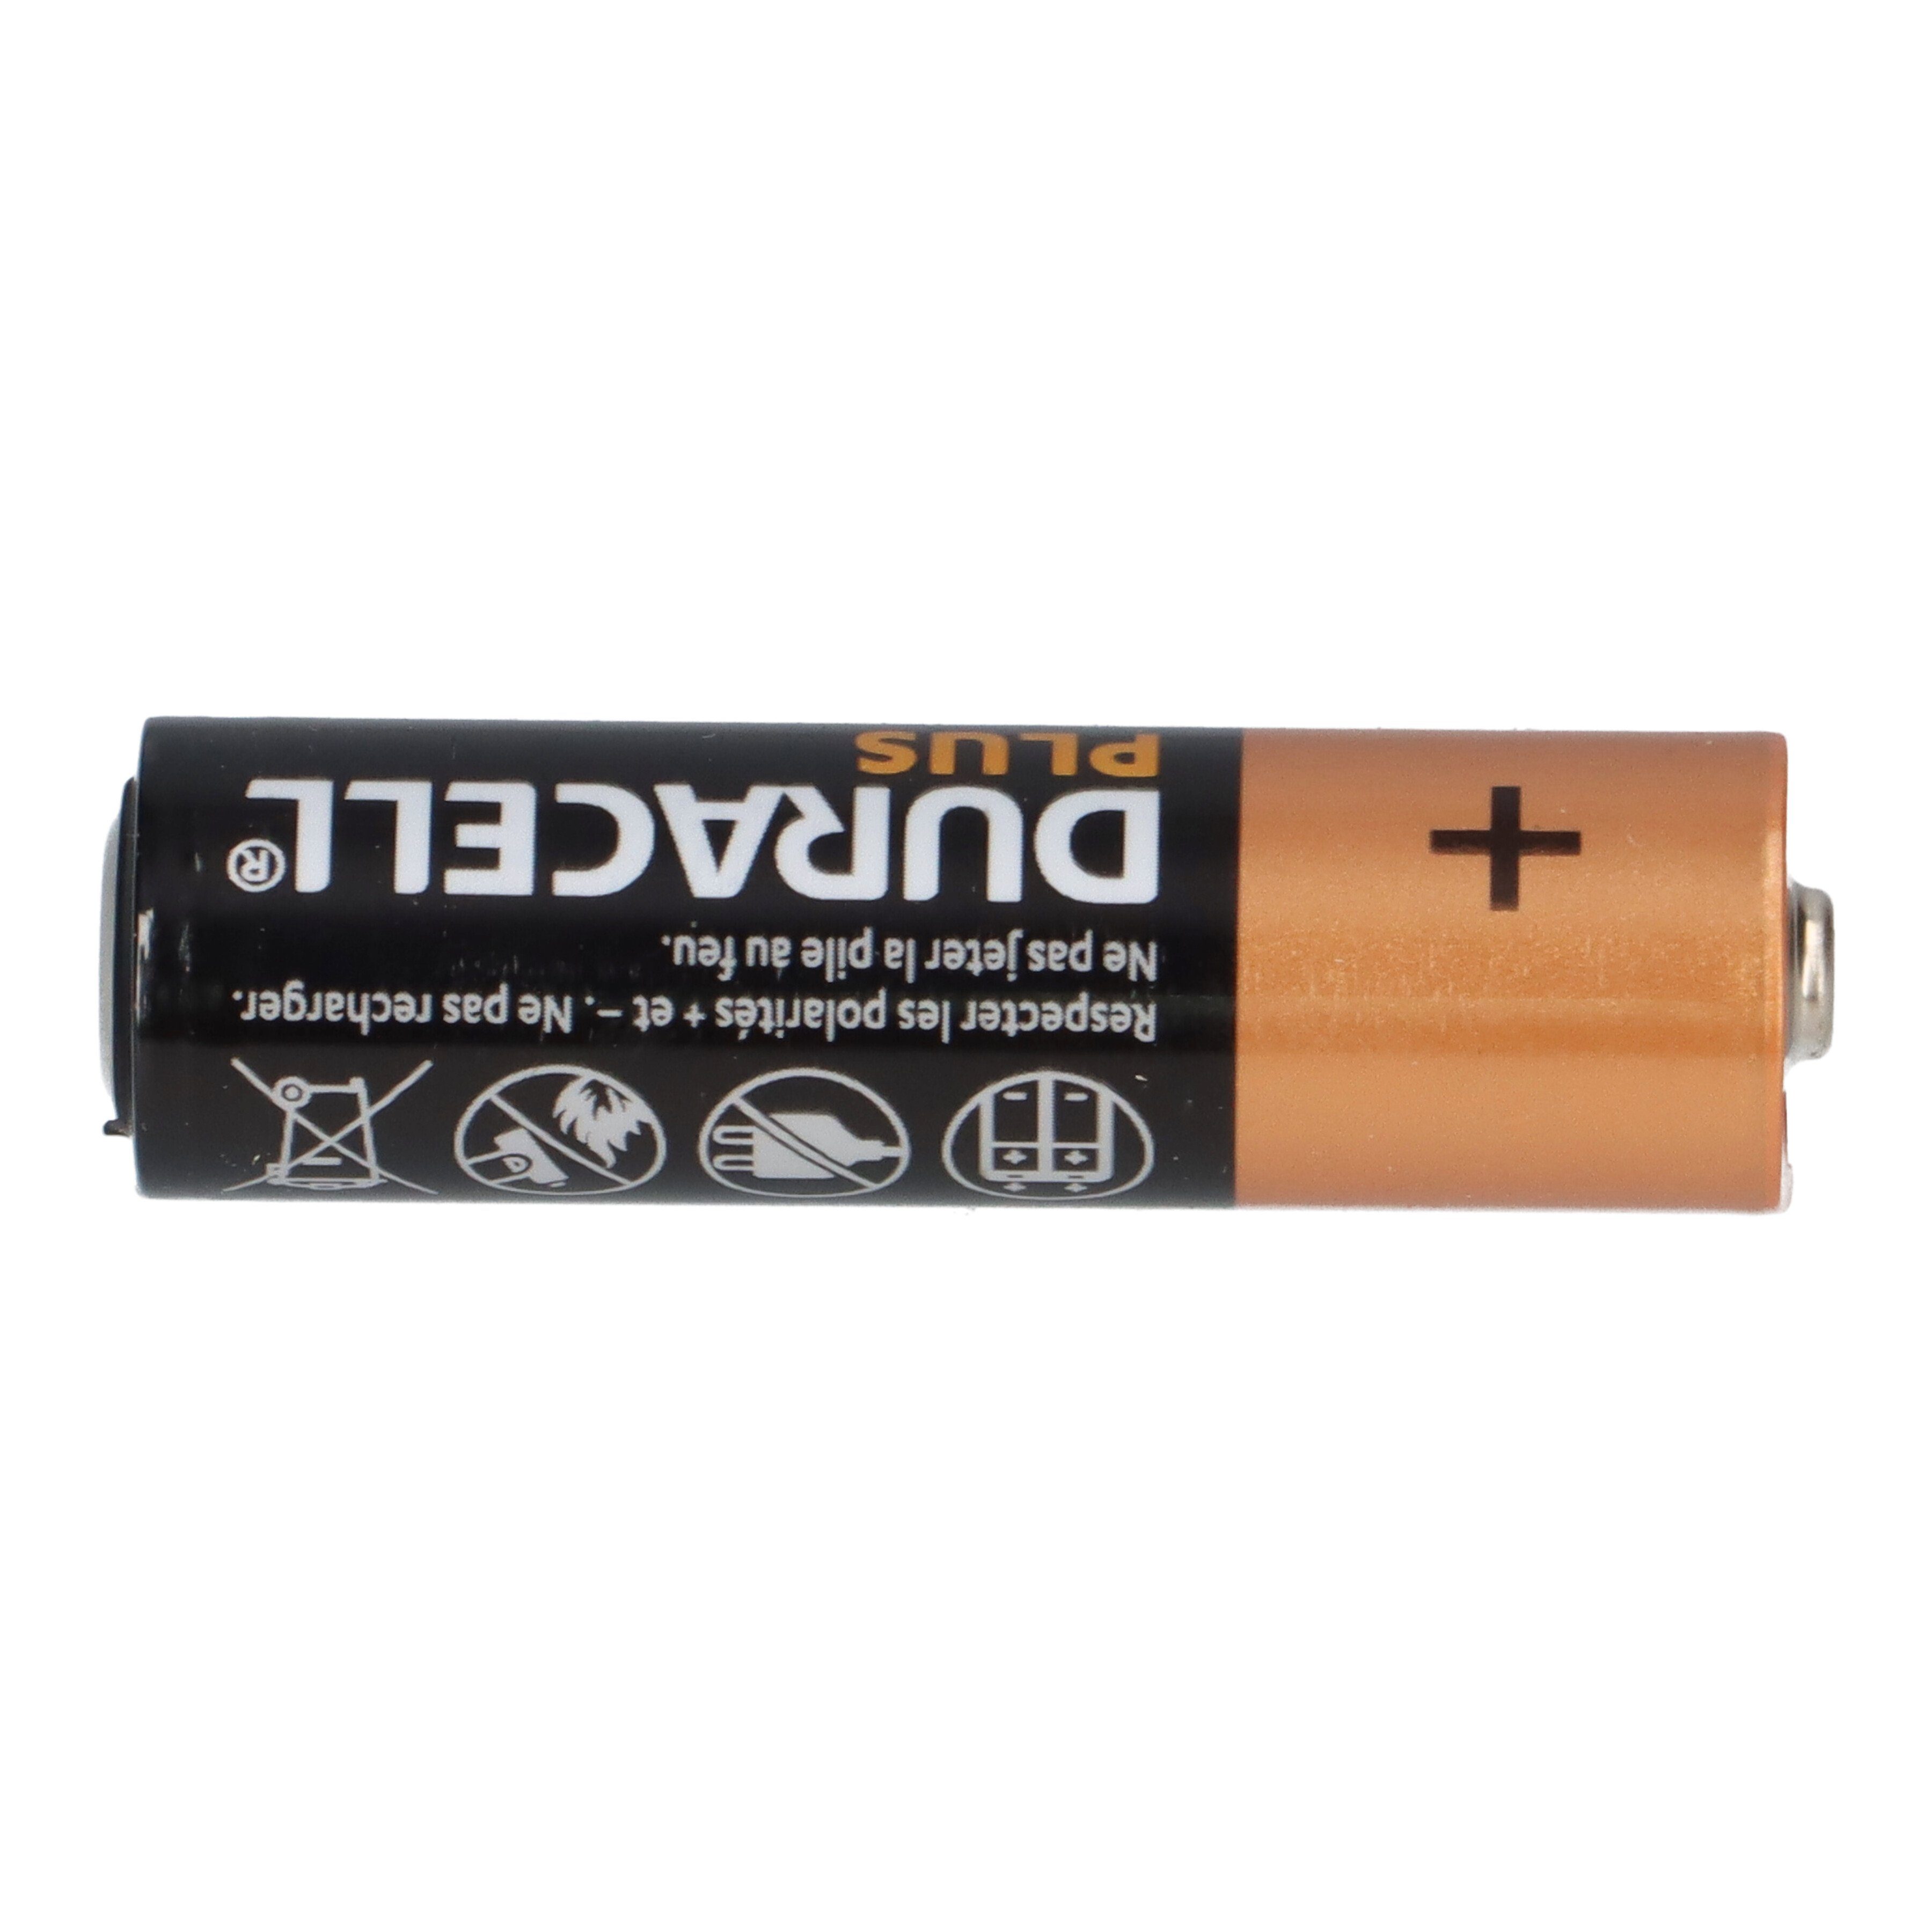 Duracell Duracell AA Batterie Plus Mignon MN1500 Batterie Power AlMn 4x